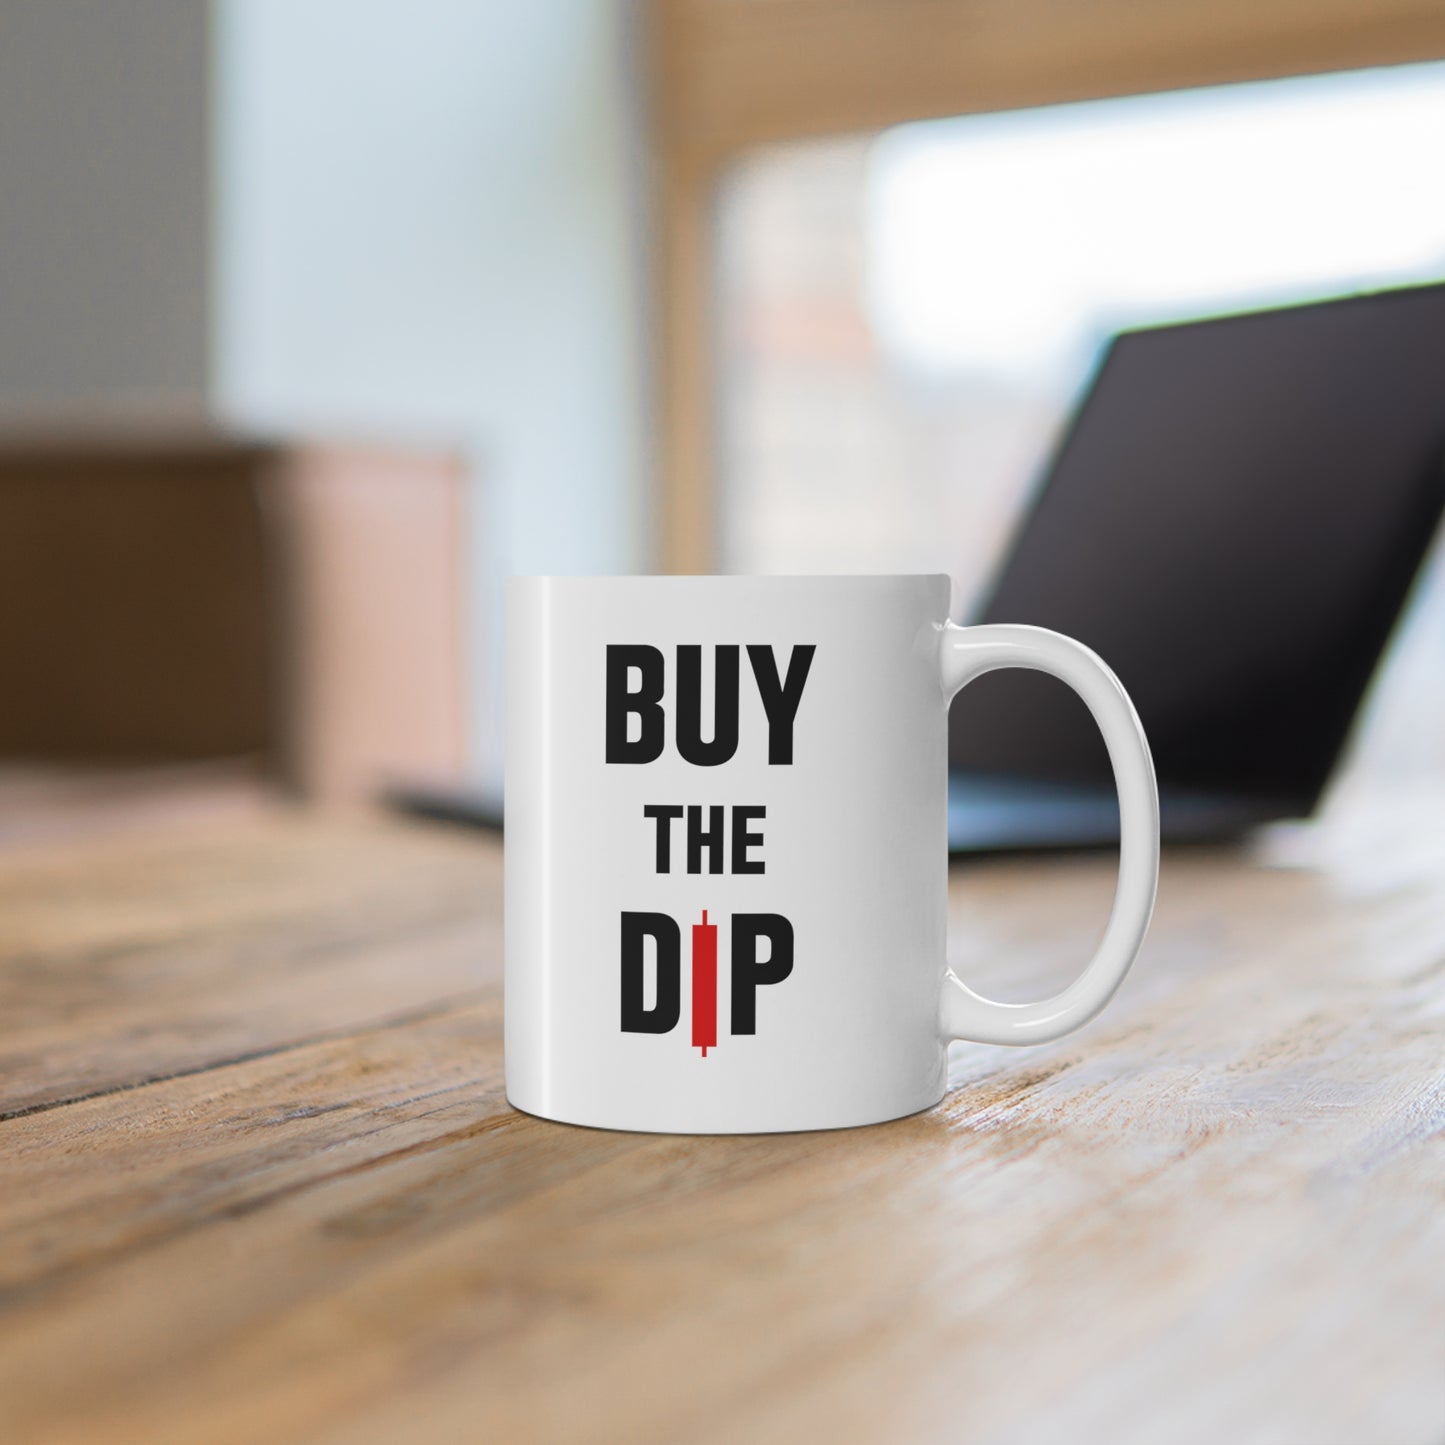 11oz ceramic mug with quote Buy the Dip